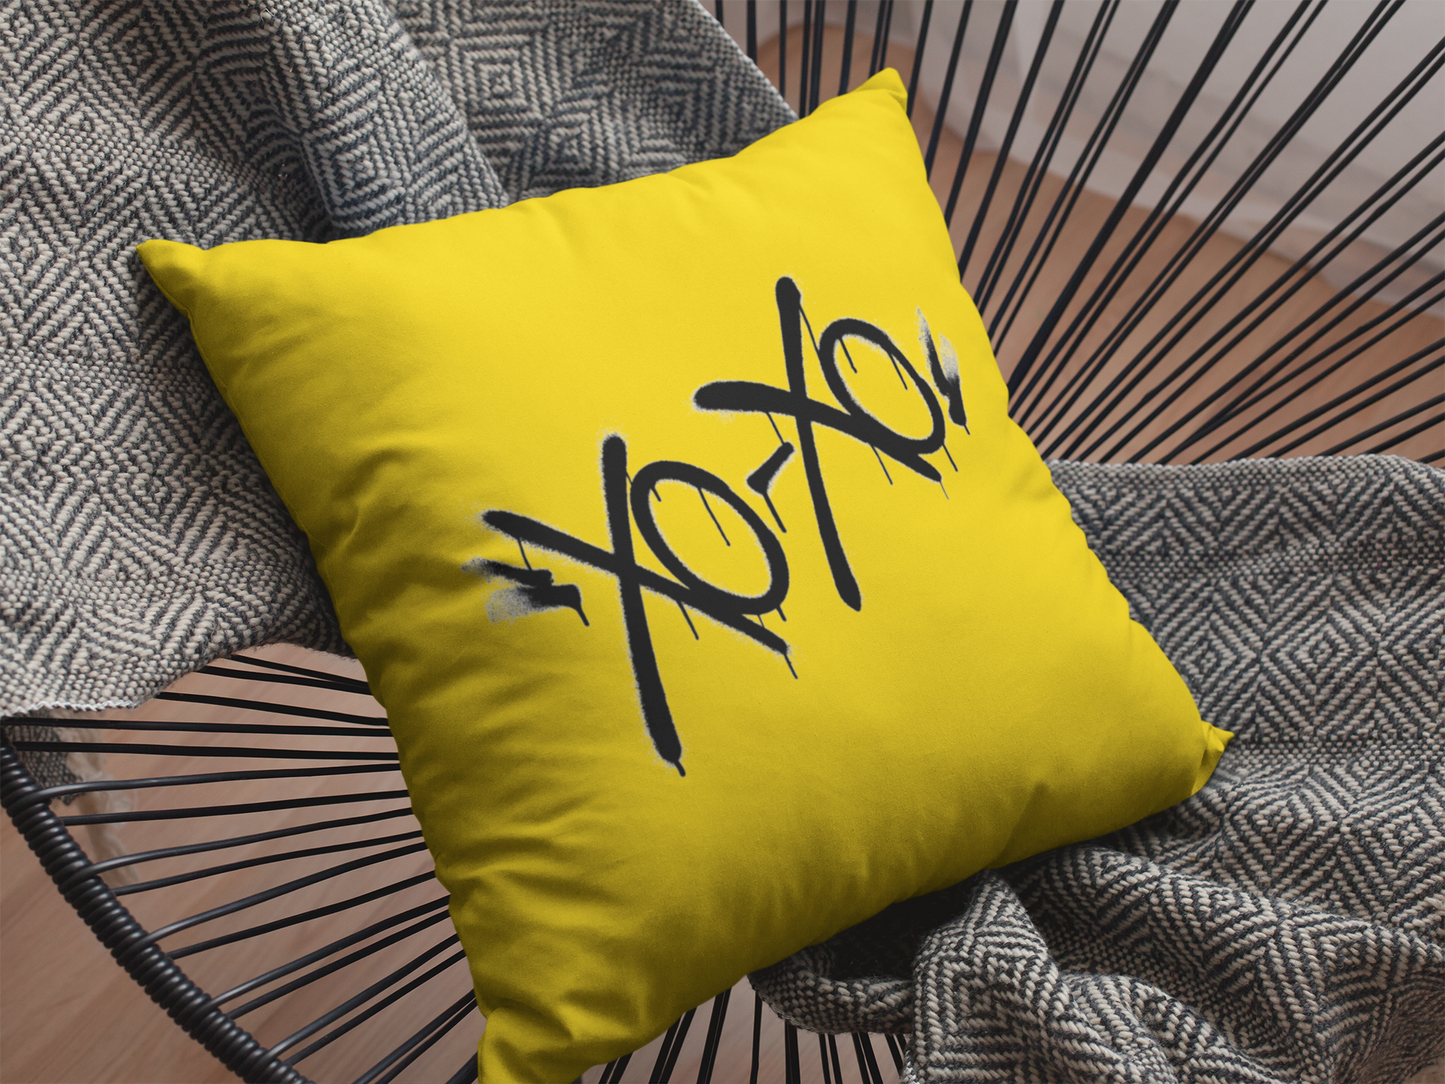 Xo-Xo Printed Cushion